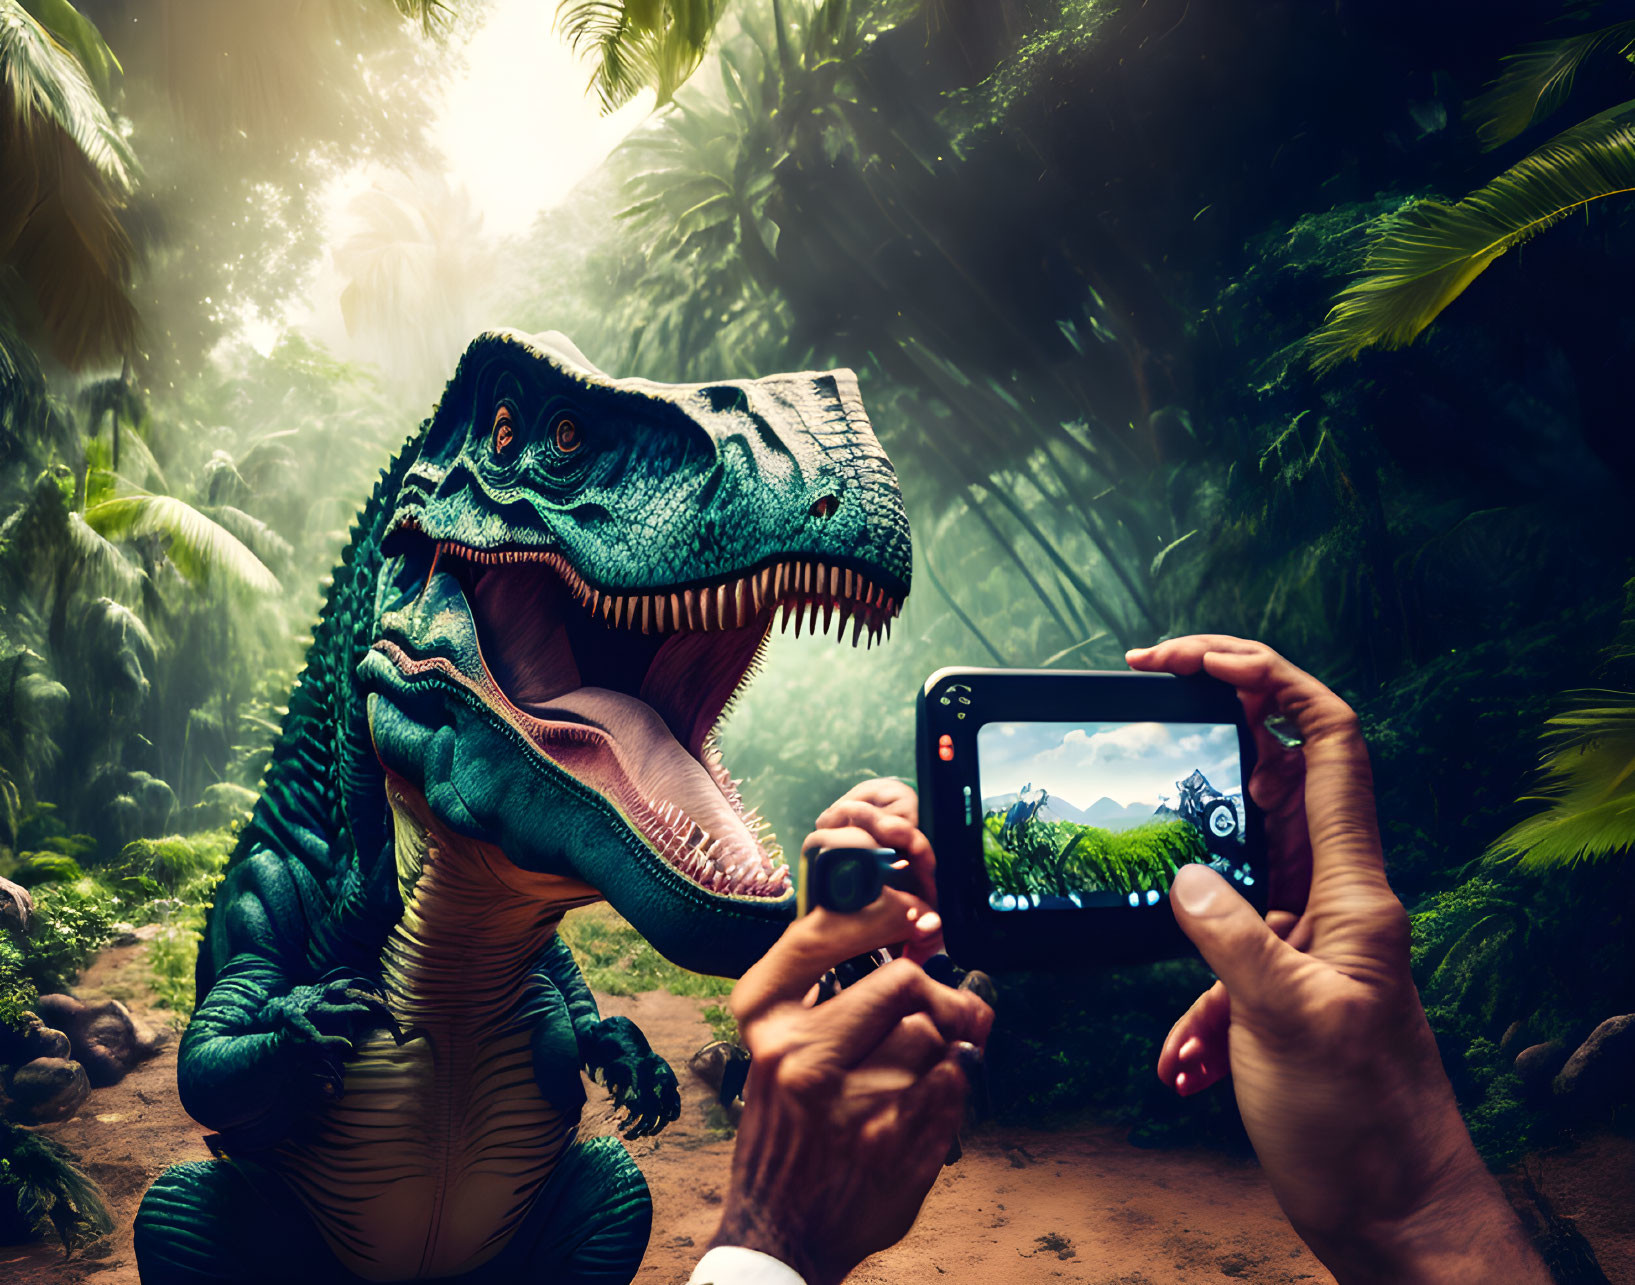 Photographer captures lifelike dinosaur model in lush jungle with smartphone